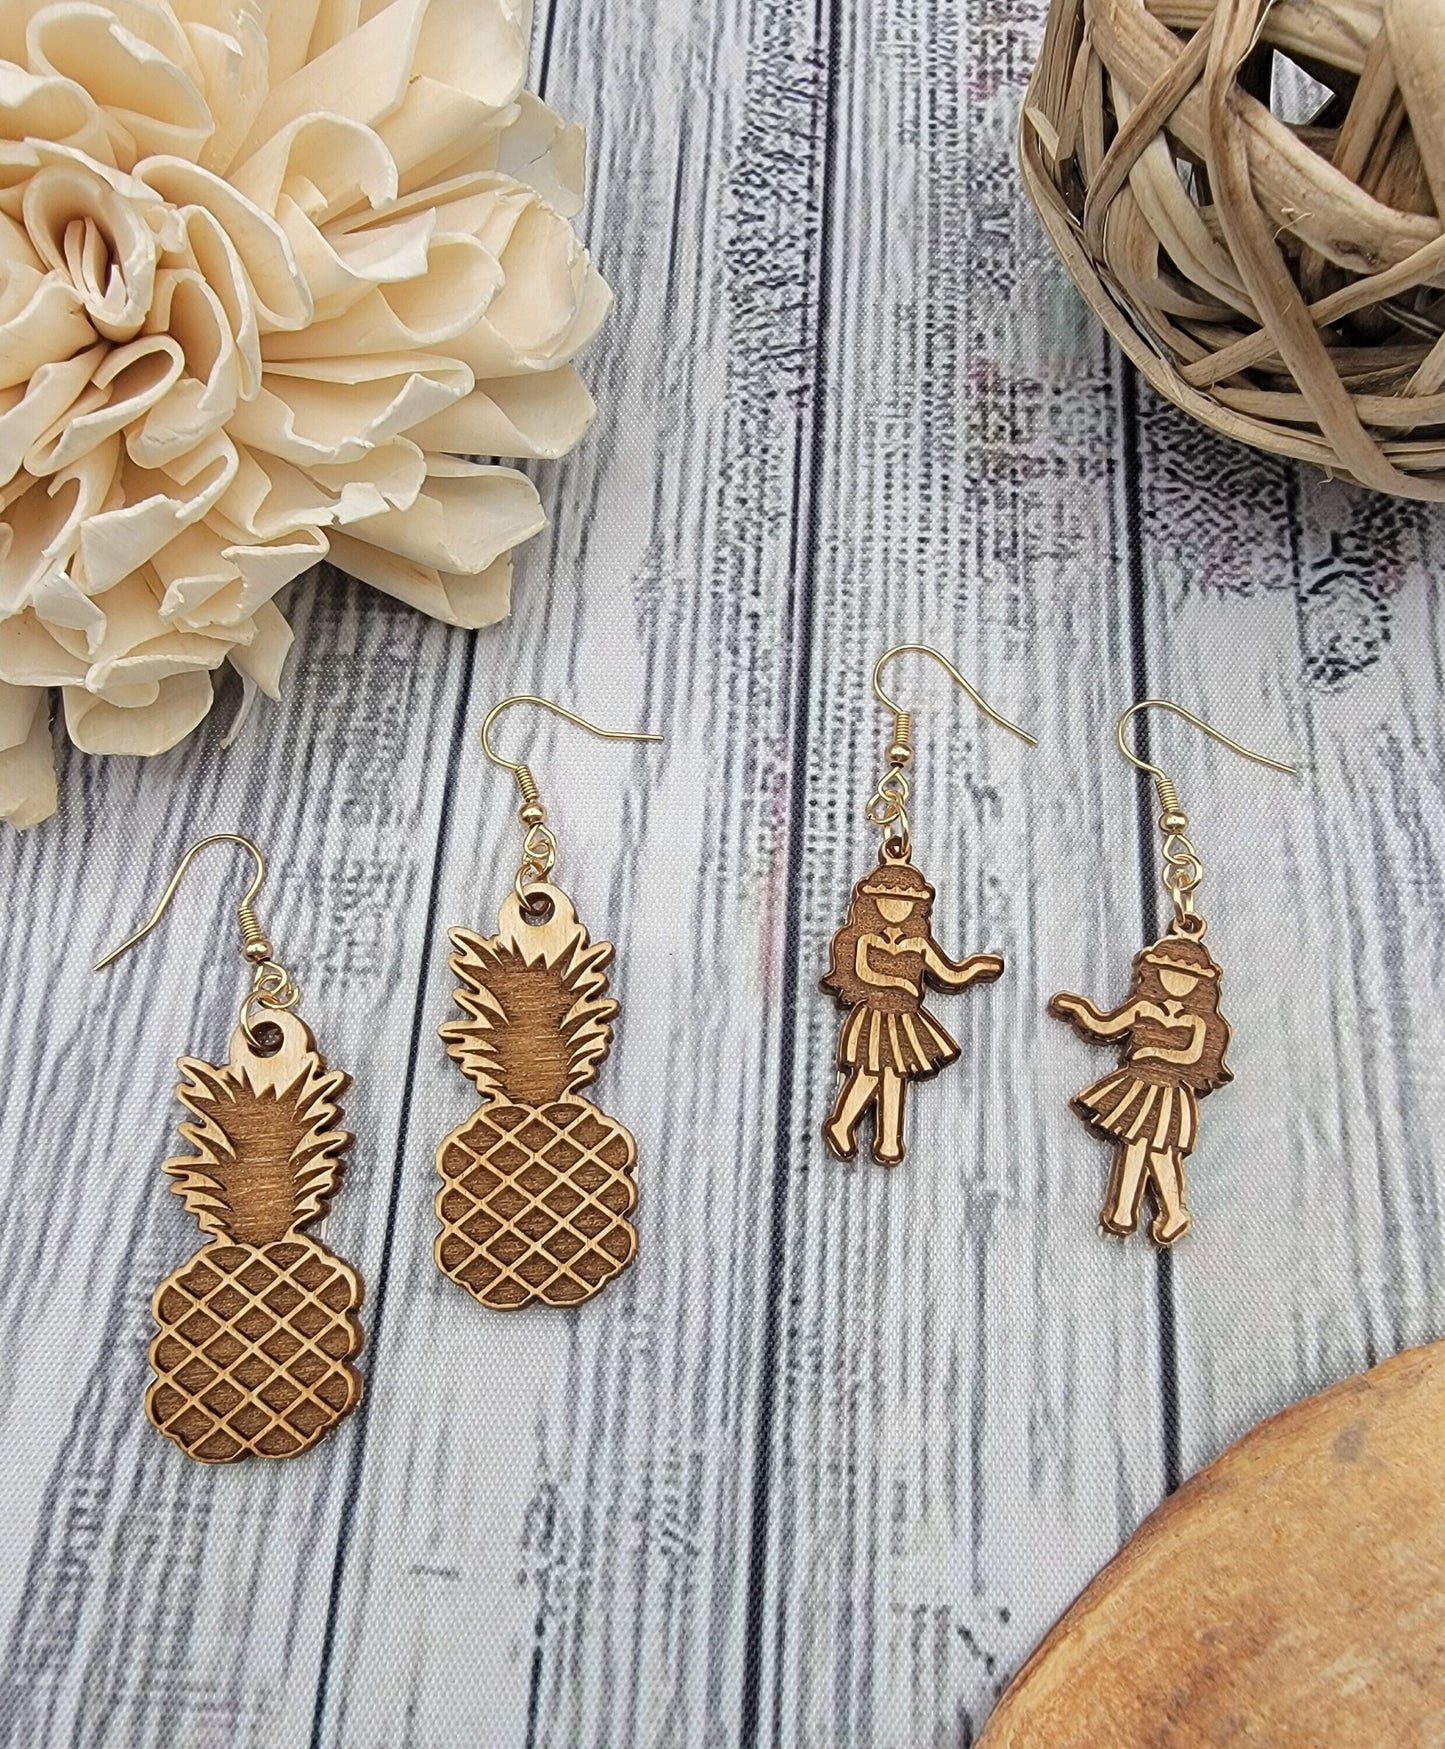 Hawaii Hula Girl | Pineapple | Dangle Earrings | Unique Gift |High quality birch wood. Hawaiian Gift